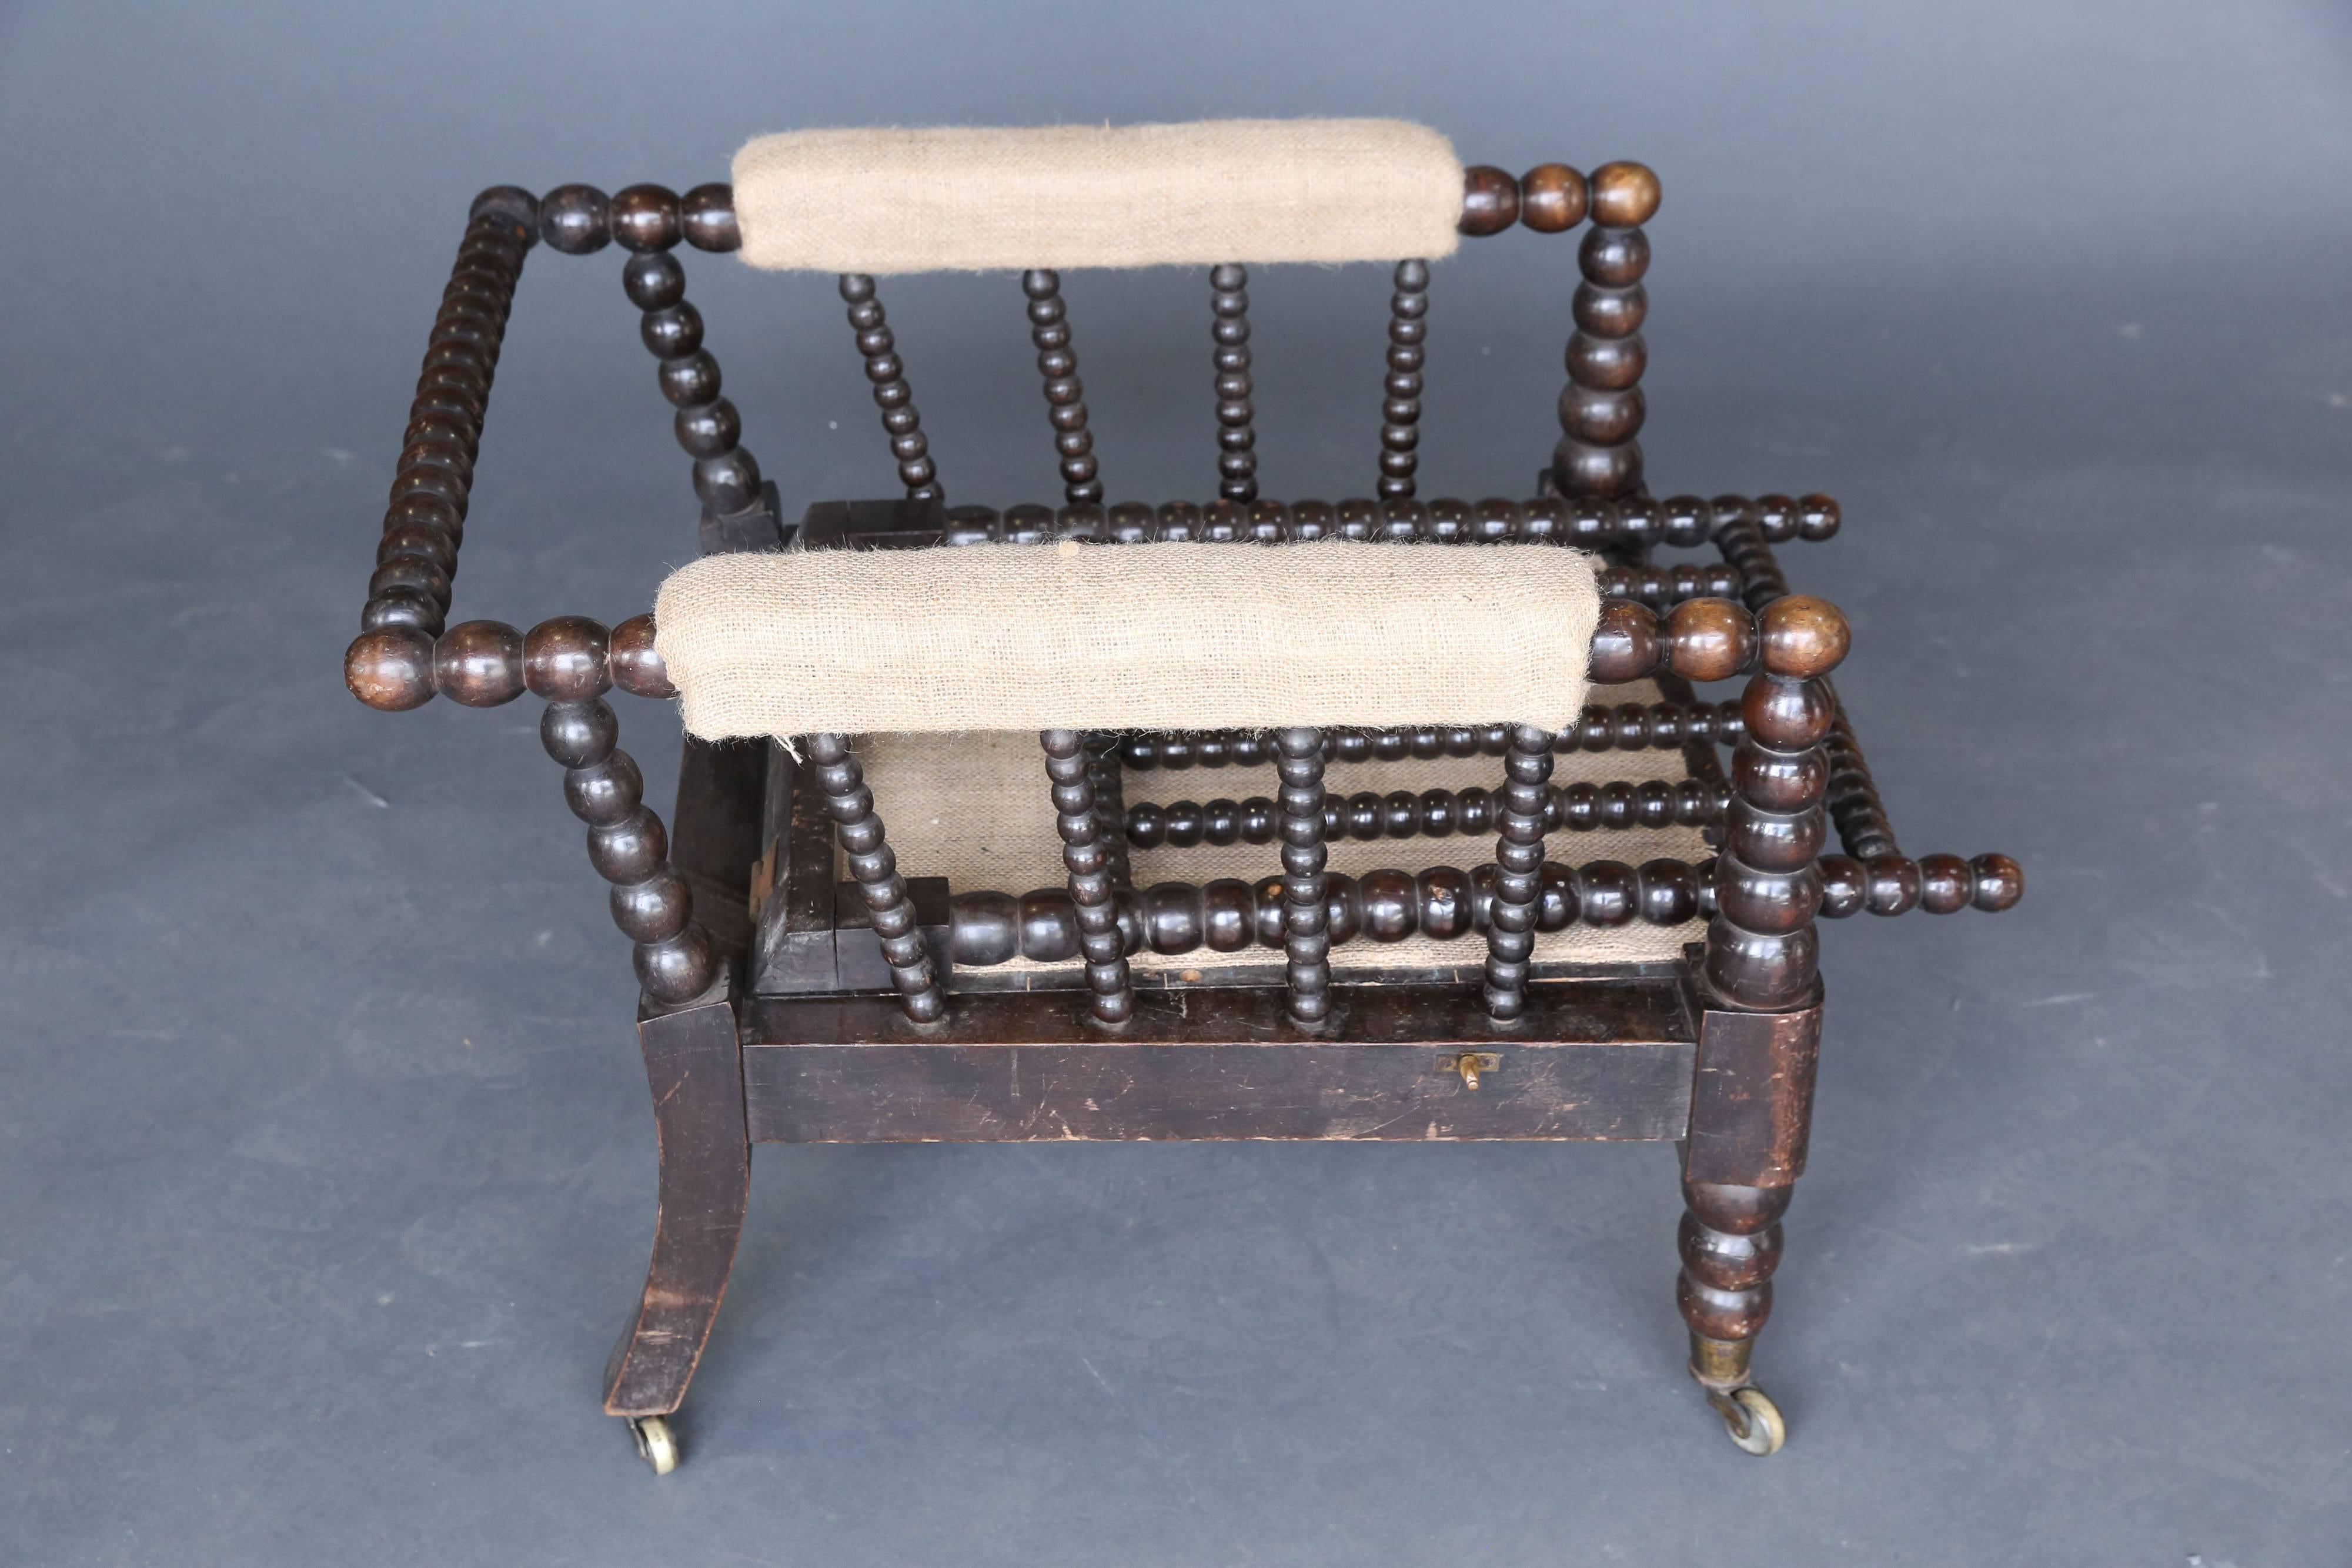 19th Century Bobbin Chair 1